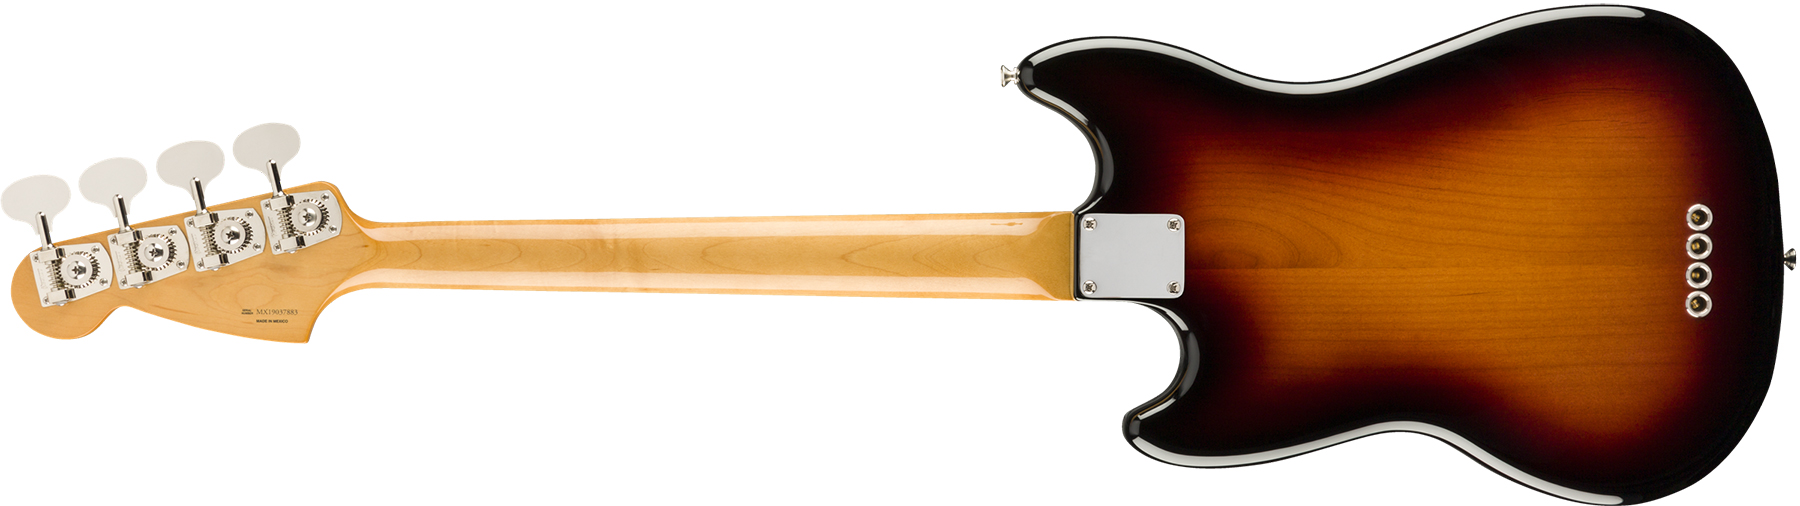 Fender Mustang Bass 60s Vintera Vintage Mex Pf - 3-color Sunburst - Short scale elektrische bas - Variation 1